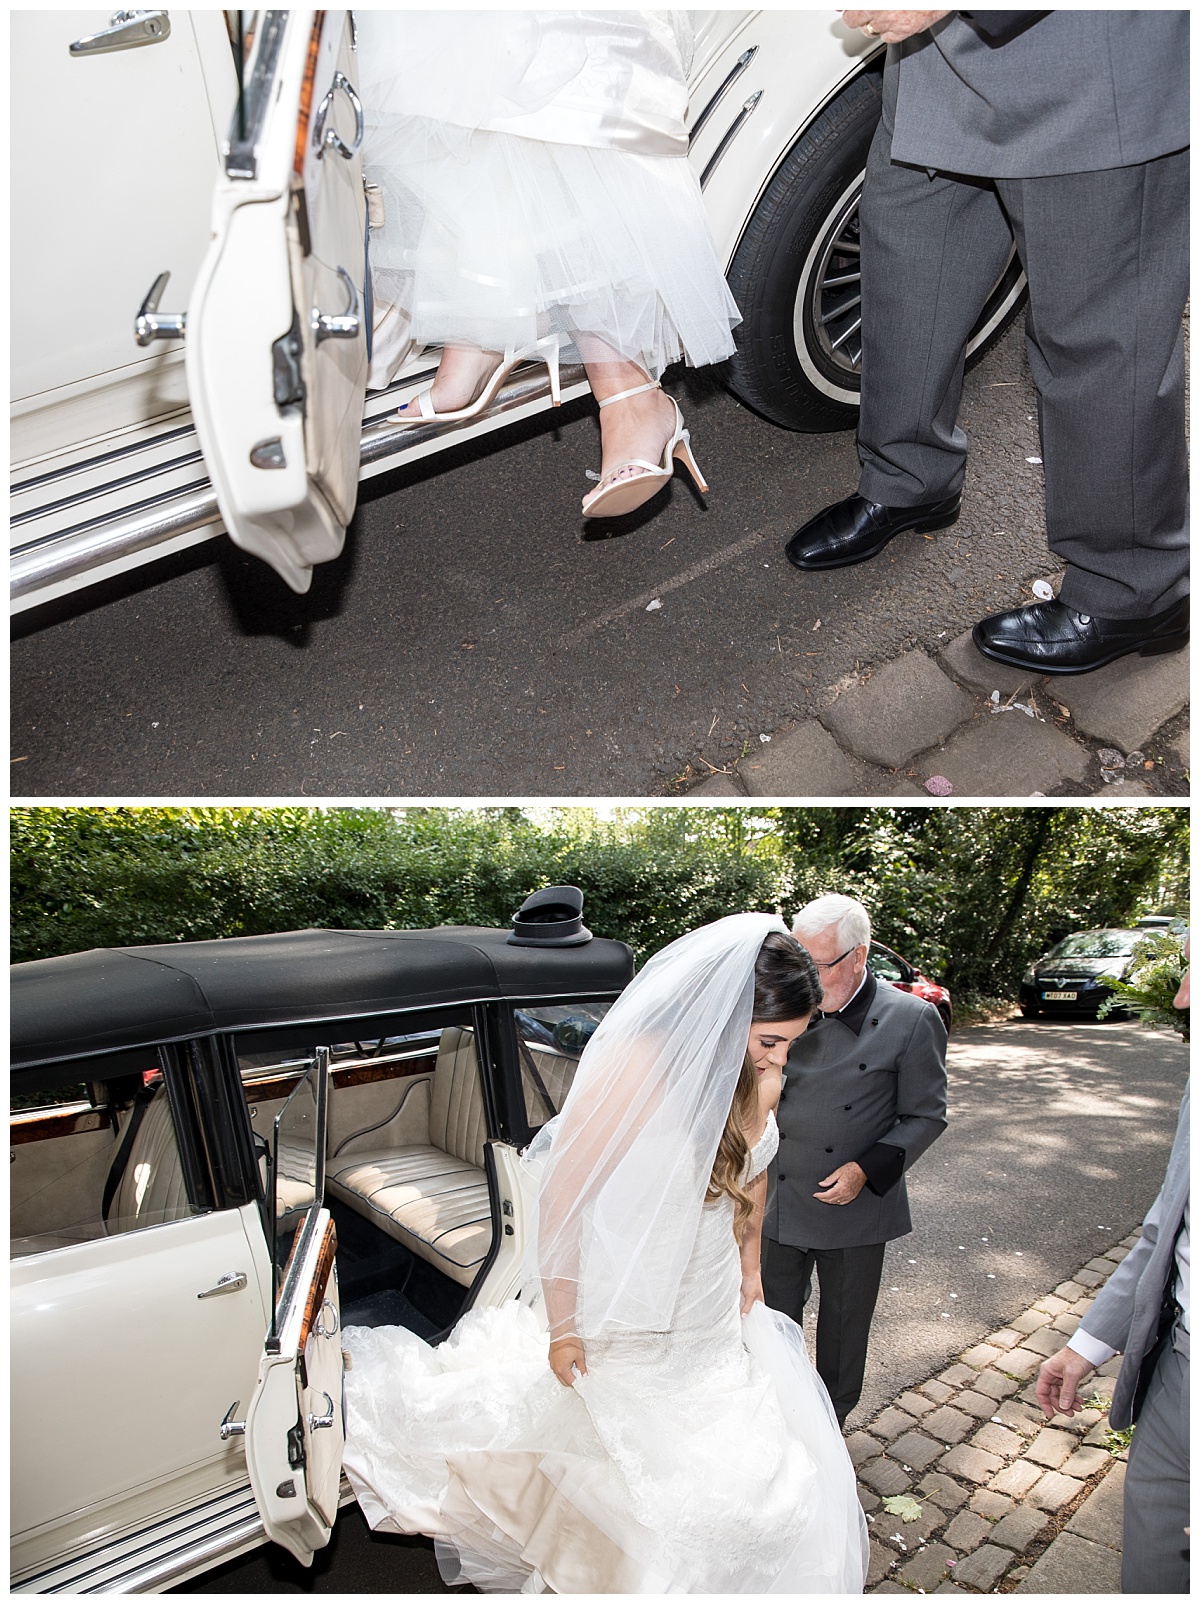 Wedding Photography Manchester - Nikki and Nathans Hallmark Hotel Wedding Day 16